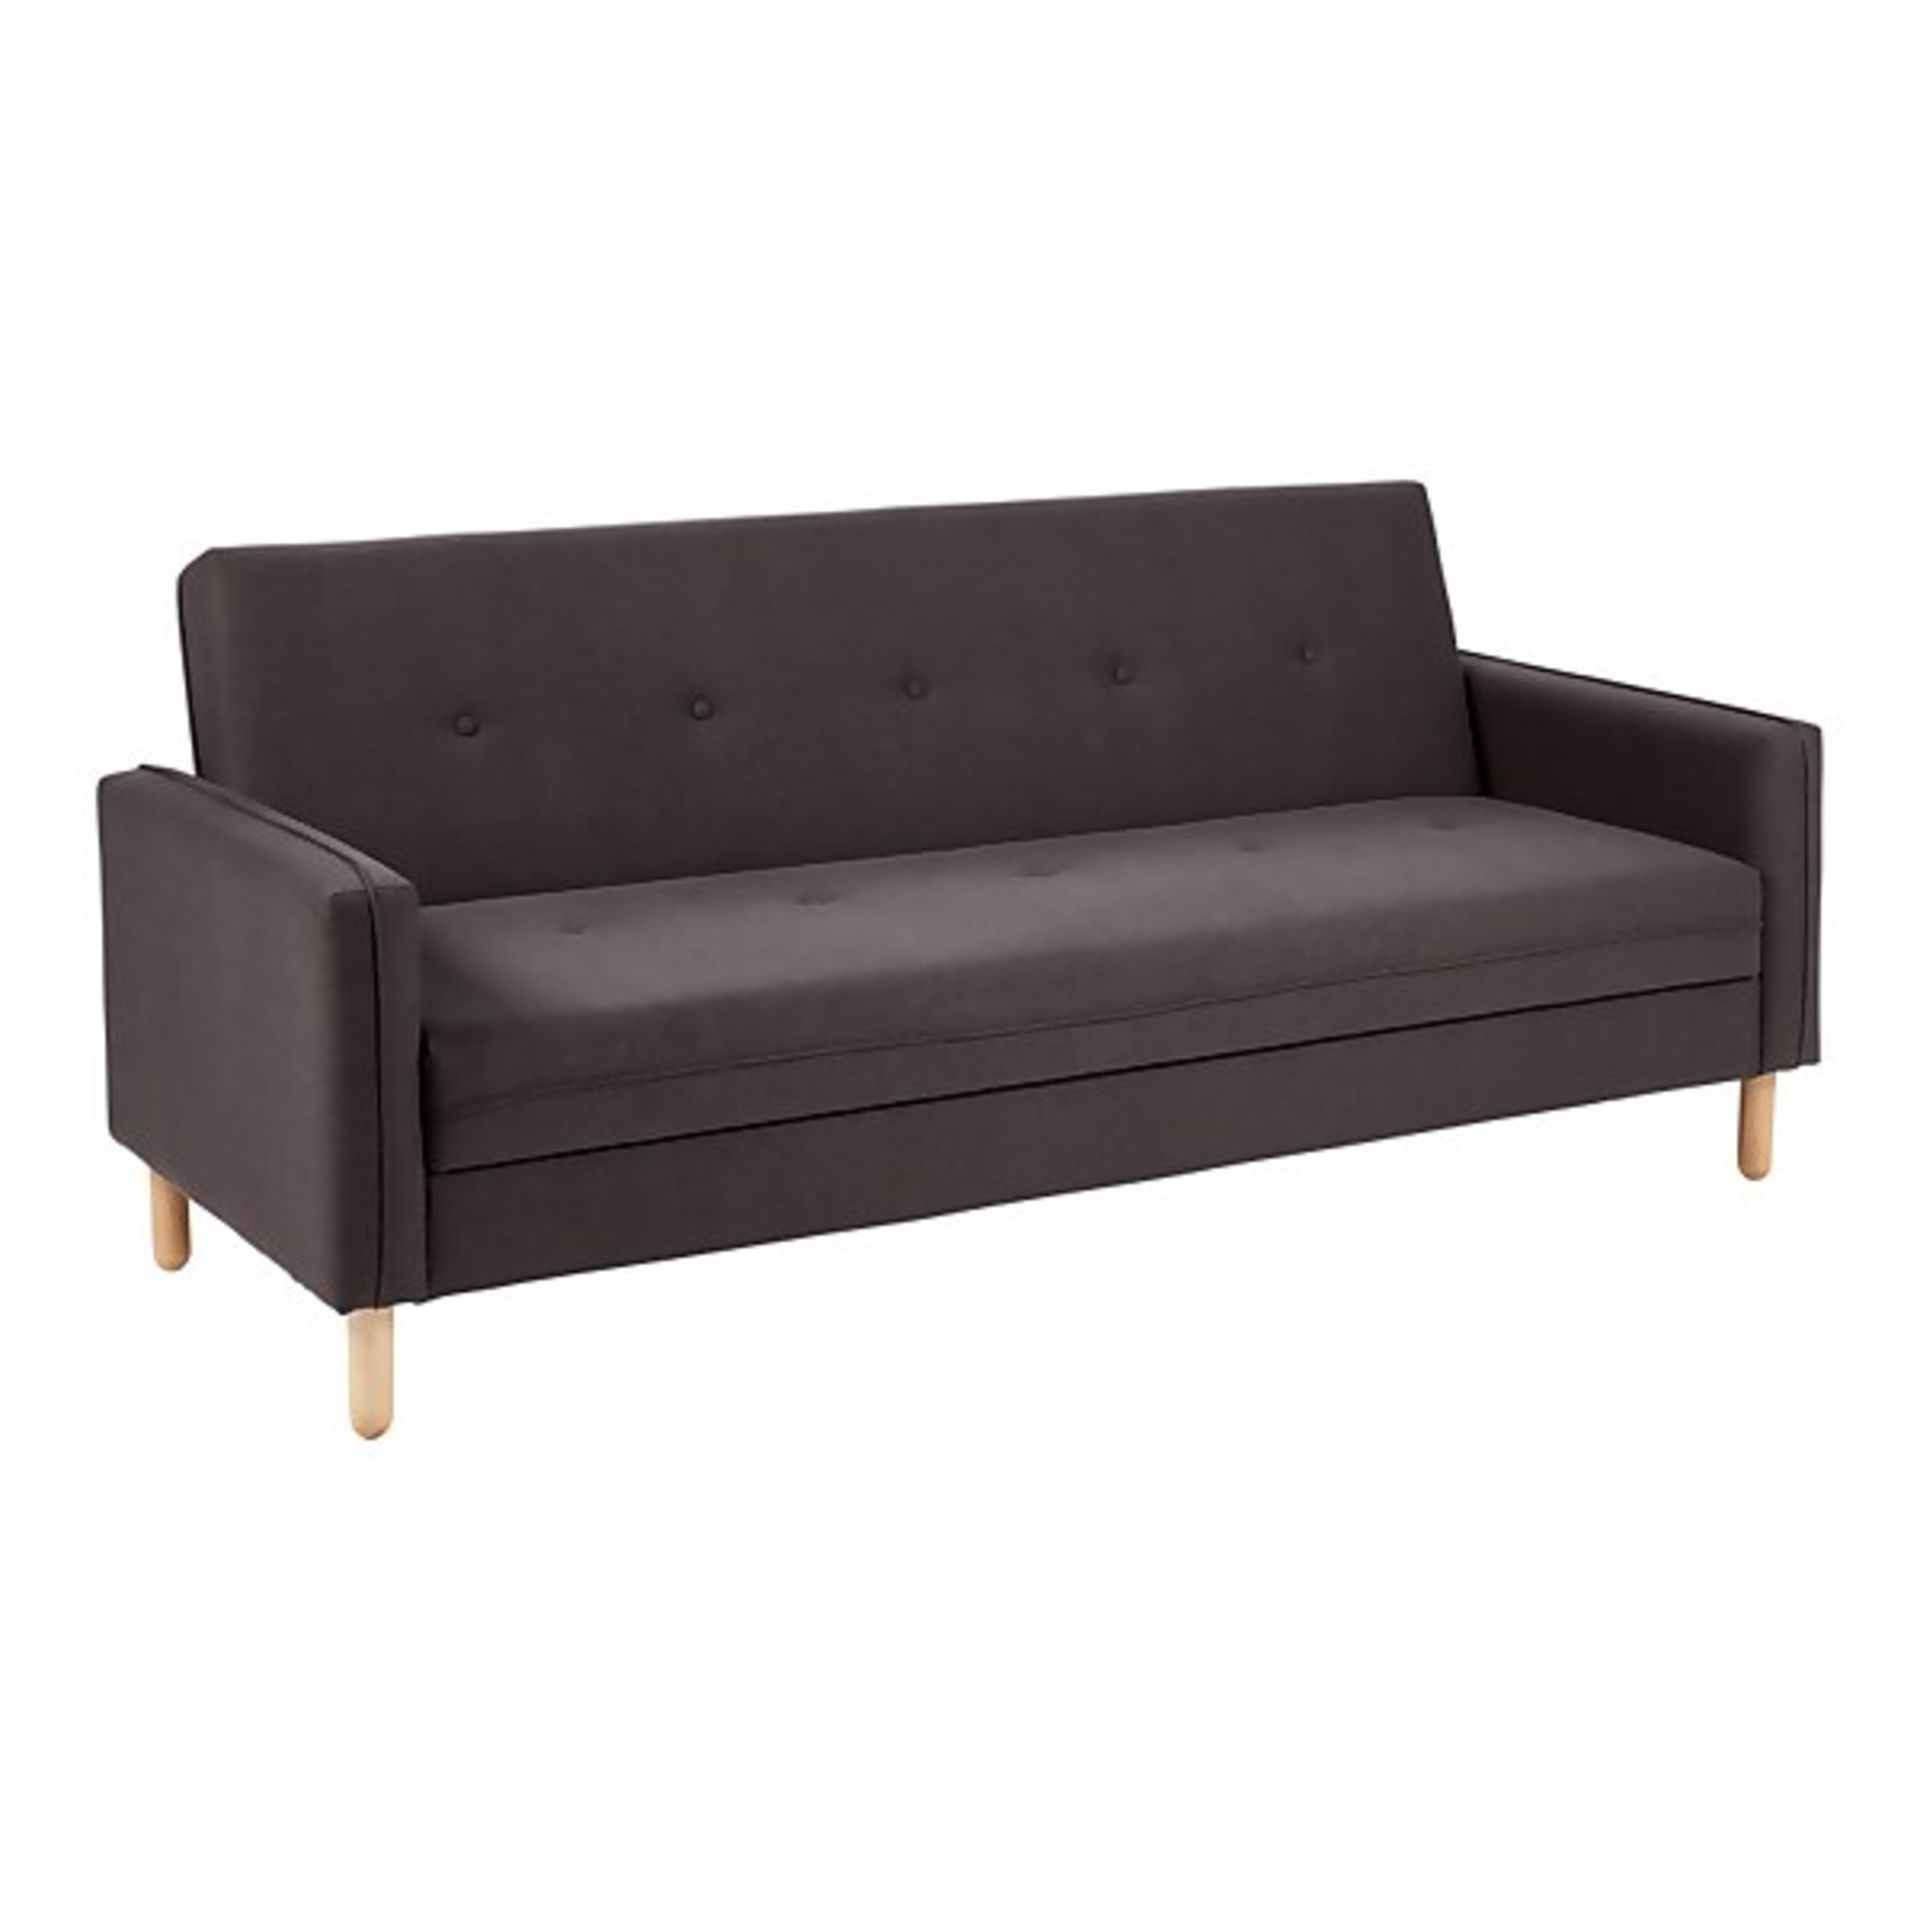 (P4) 1x Sindy Sofa Bed With Storage Charcoal RRP £300. (Sofa: H85x W200x D84cm). (Bed: H44x W200x D